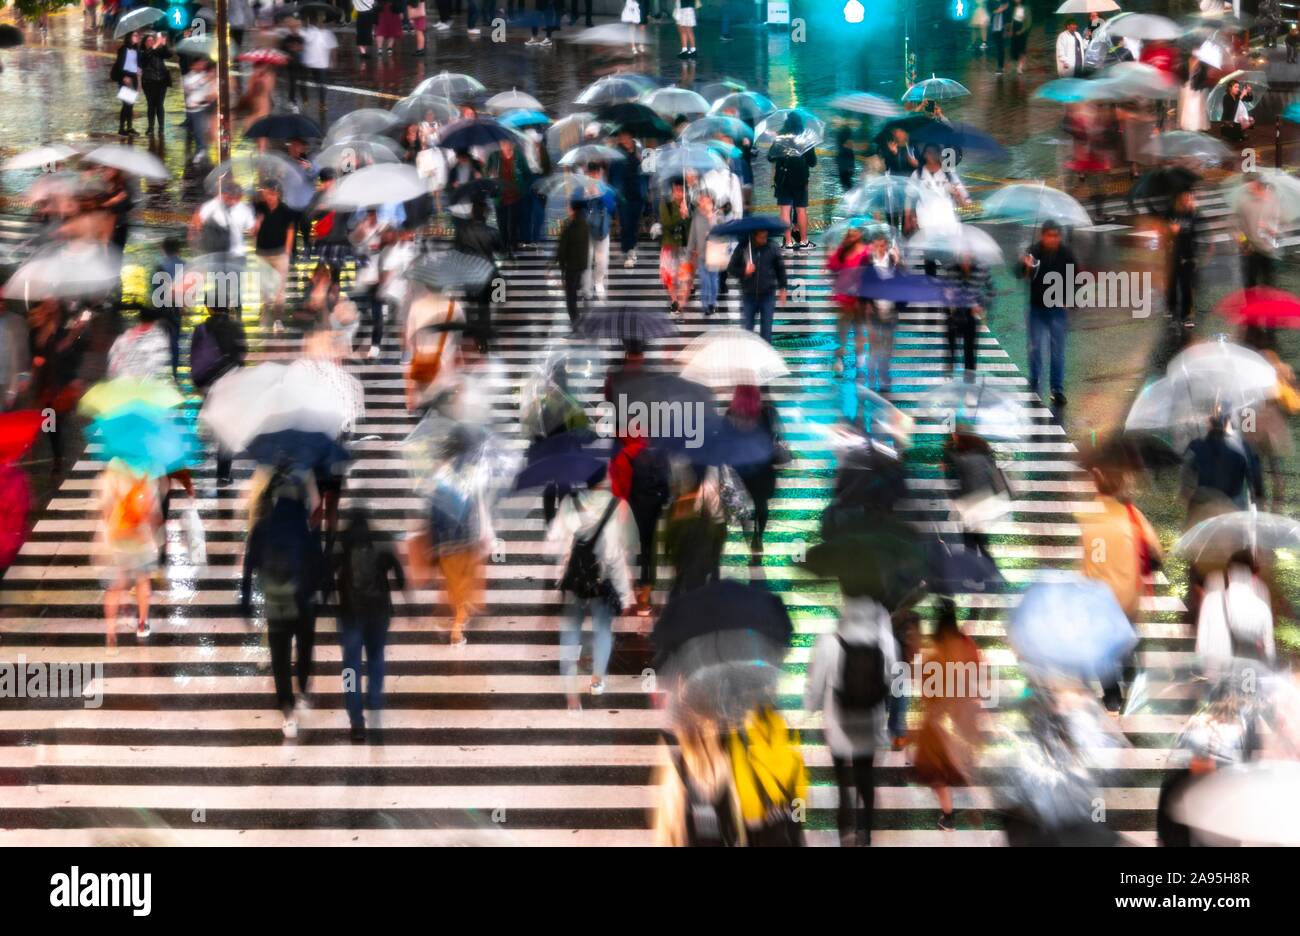 Crowd with umbrellas on zebra crossings at night, motion blur, Shibuya Crossing, Shibuya, Tokyo, Japan Stock Photo